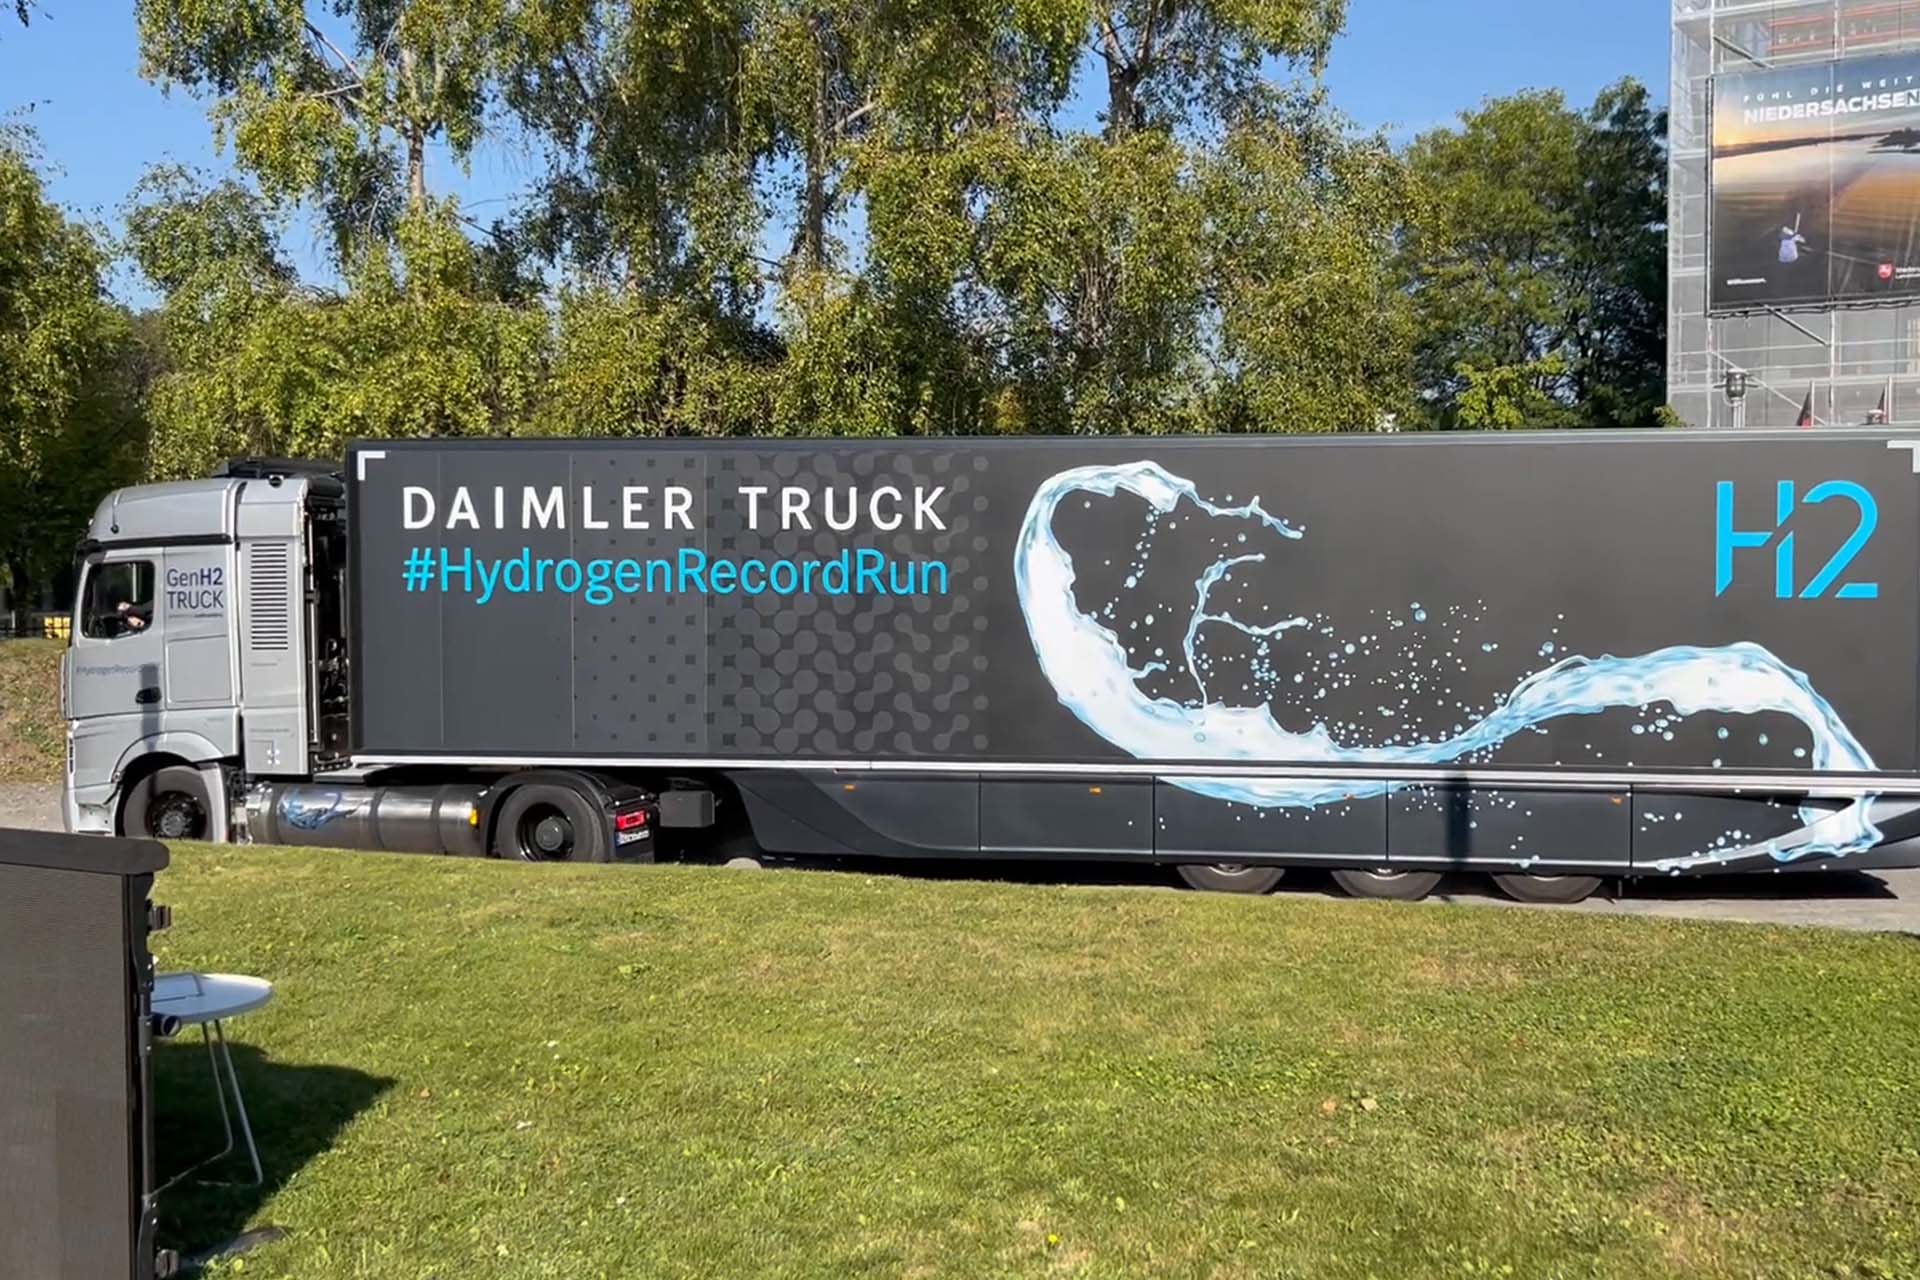 Dejero and Livecast capture landmark Daimler Truck’s GenH2 Truck Hydrogen Record Run